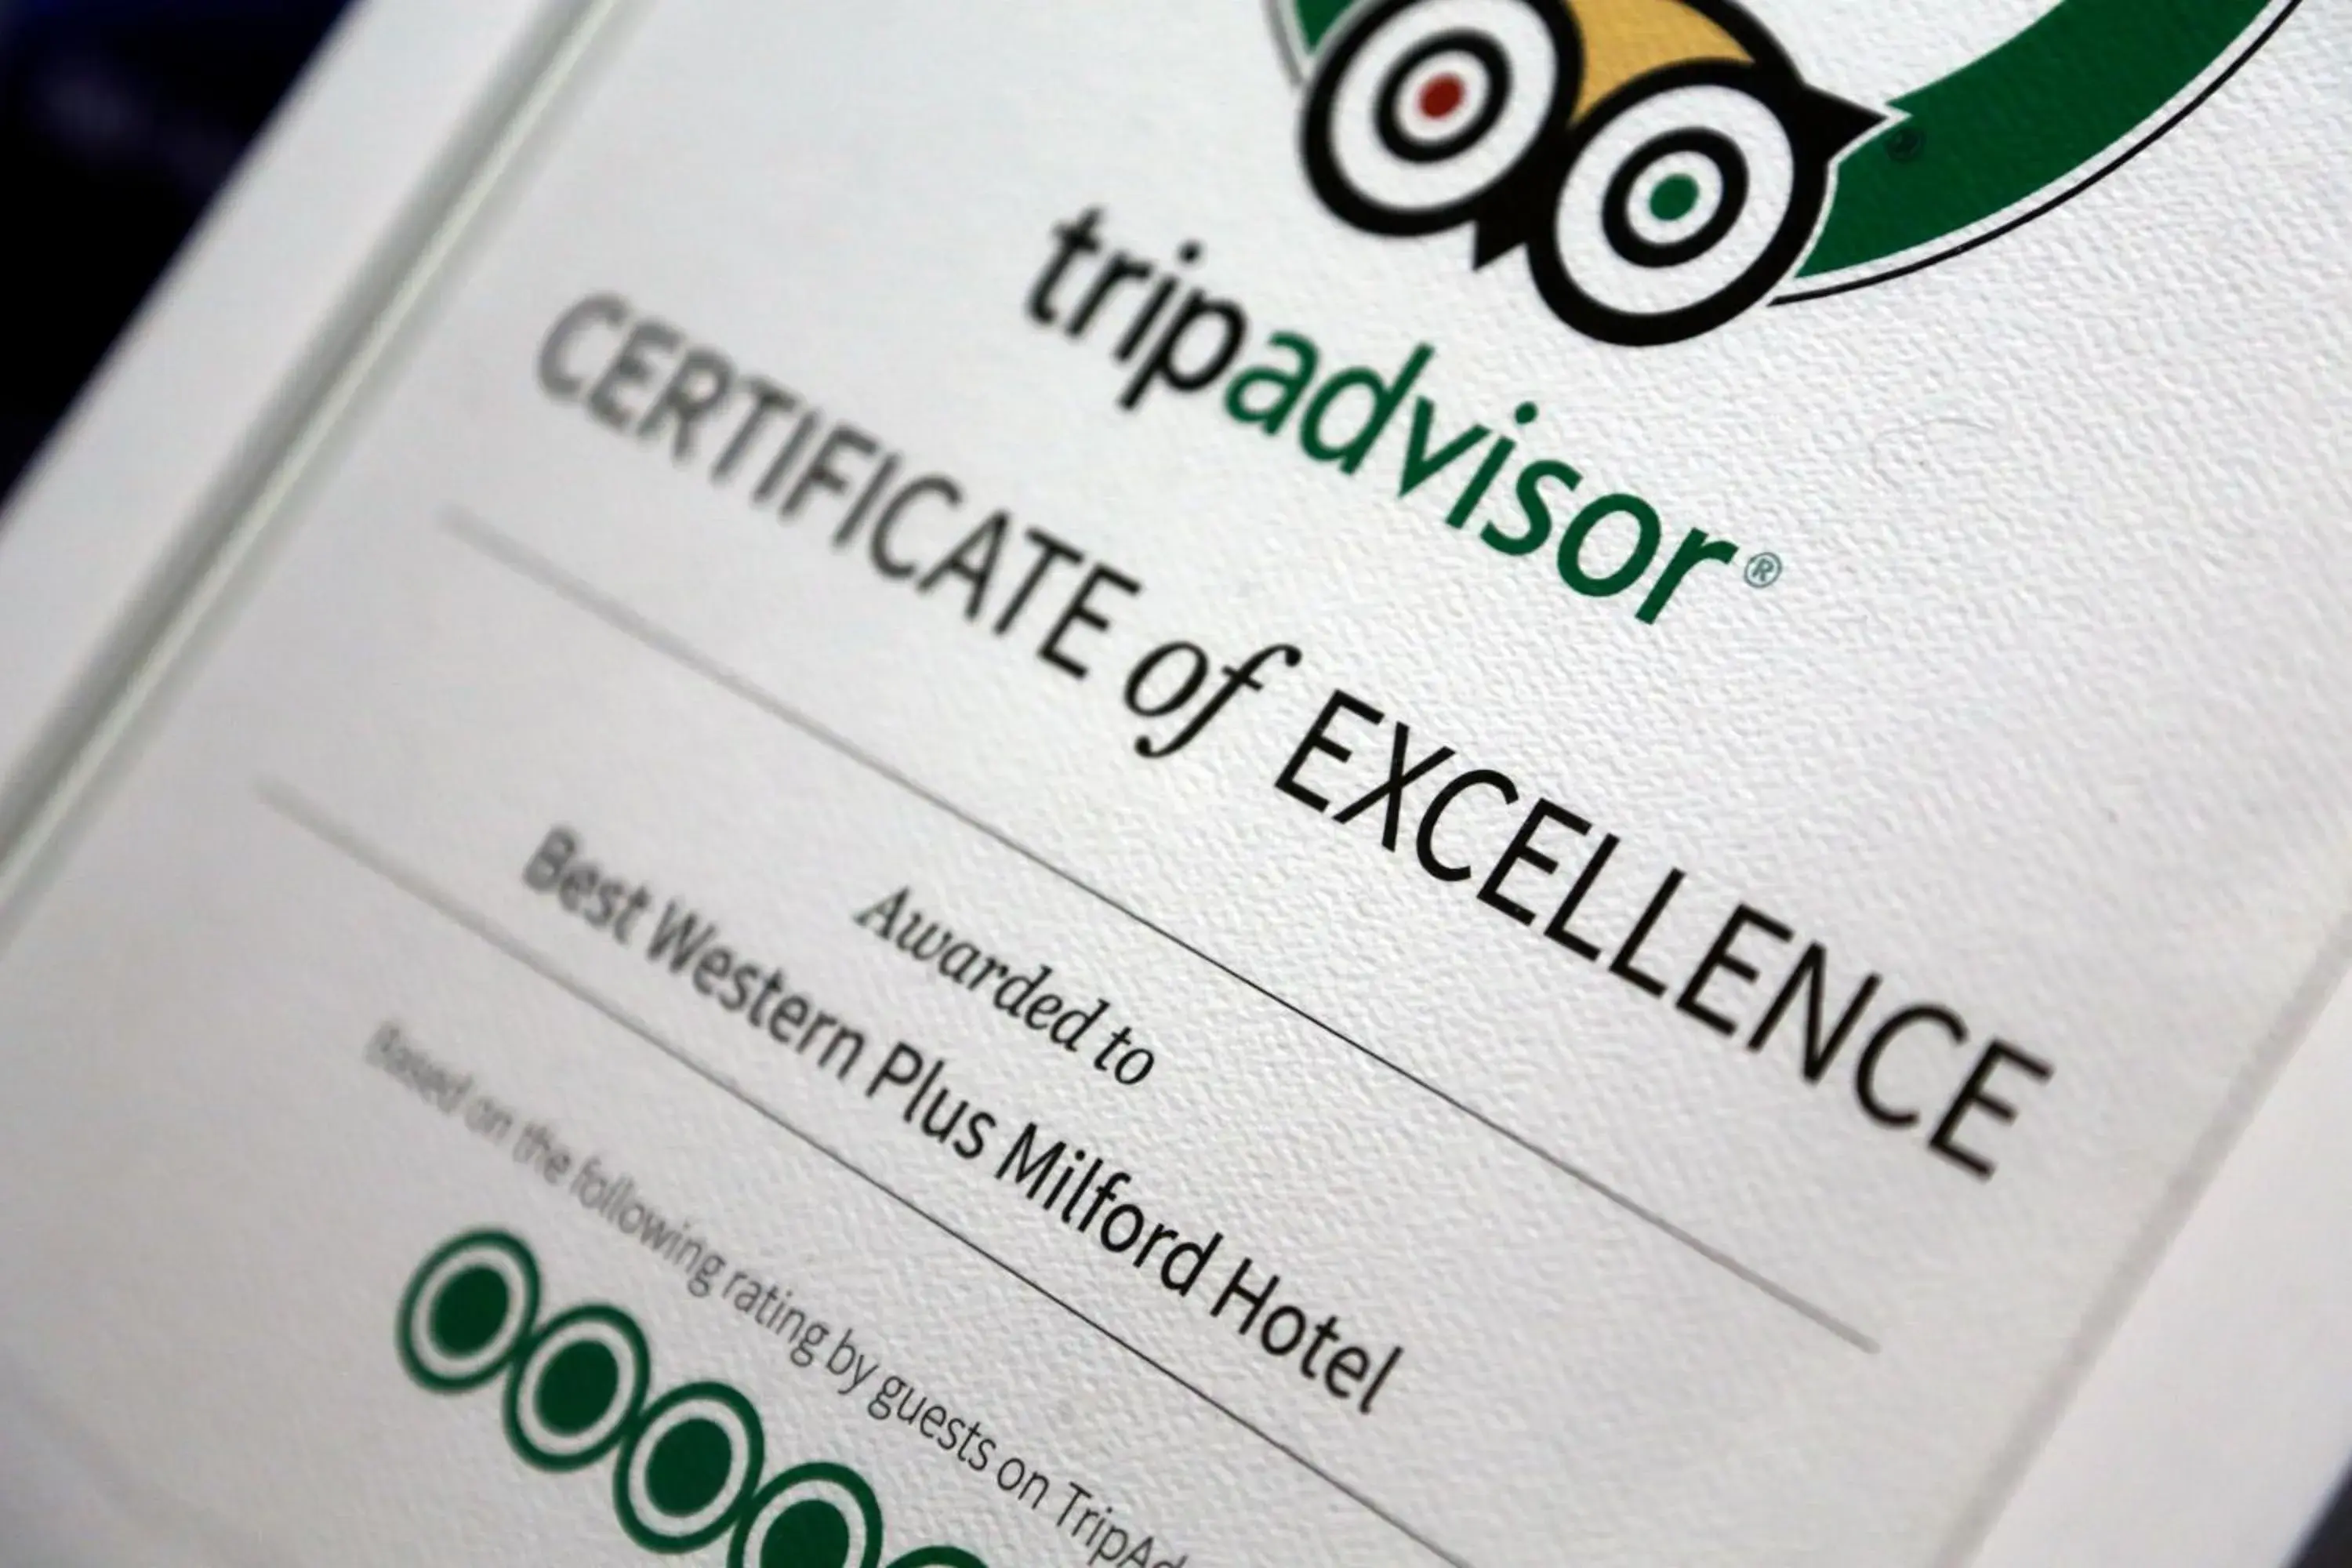 Certificate/Award in Best Western Plus Milford Hotel